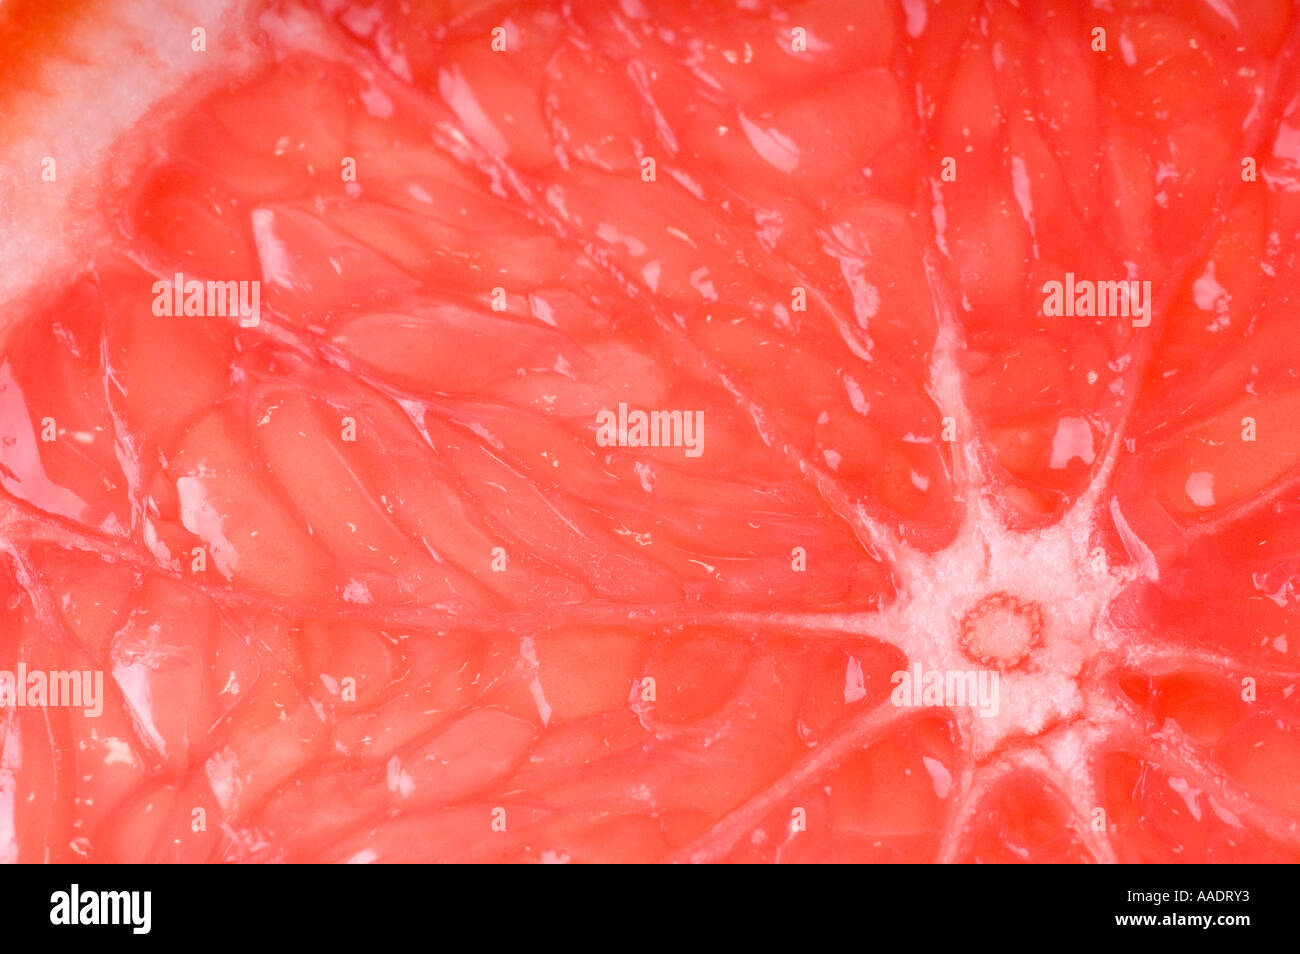 A slice of pink grapefruit Stock Photo